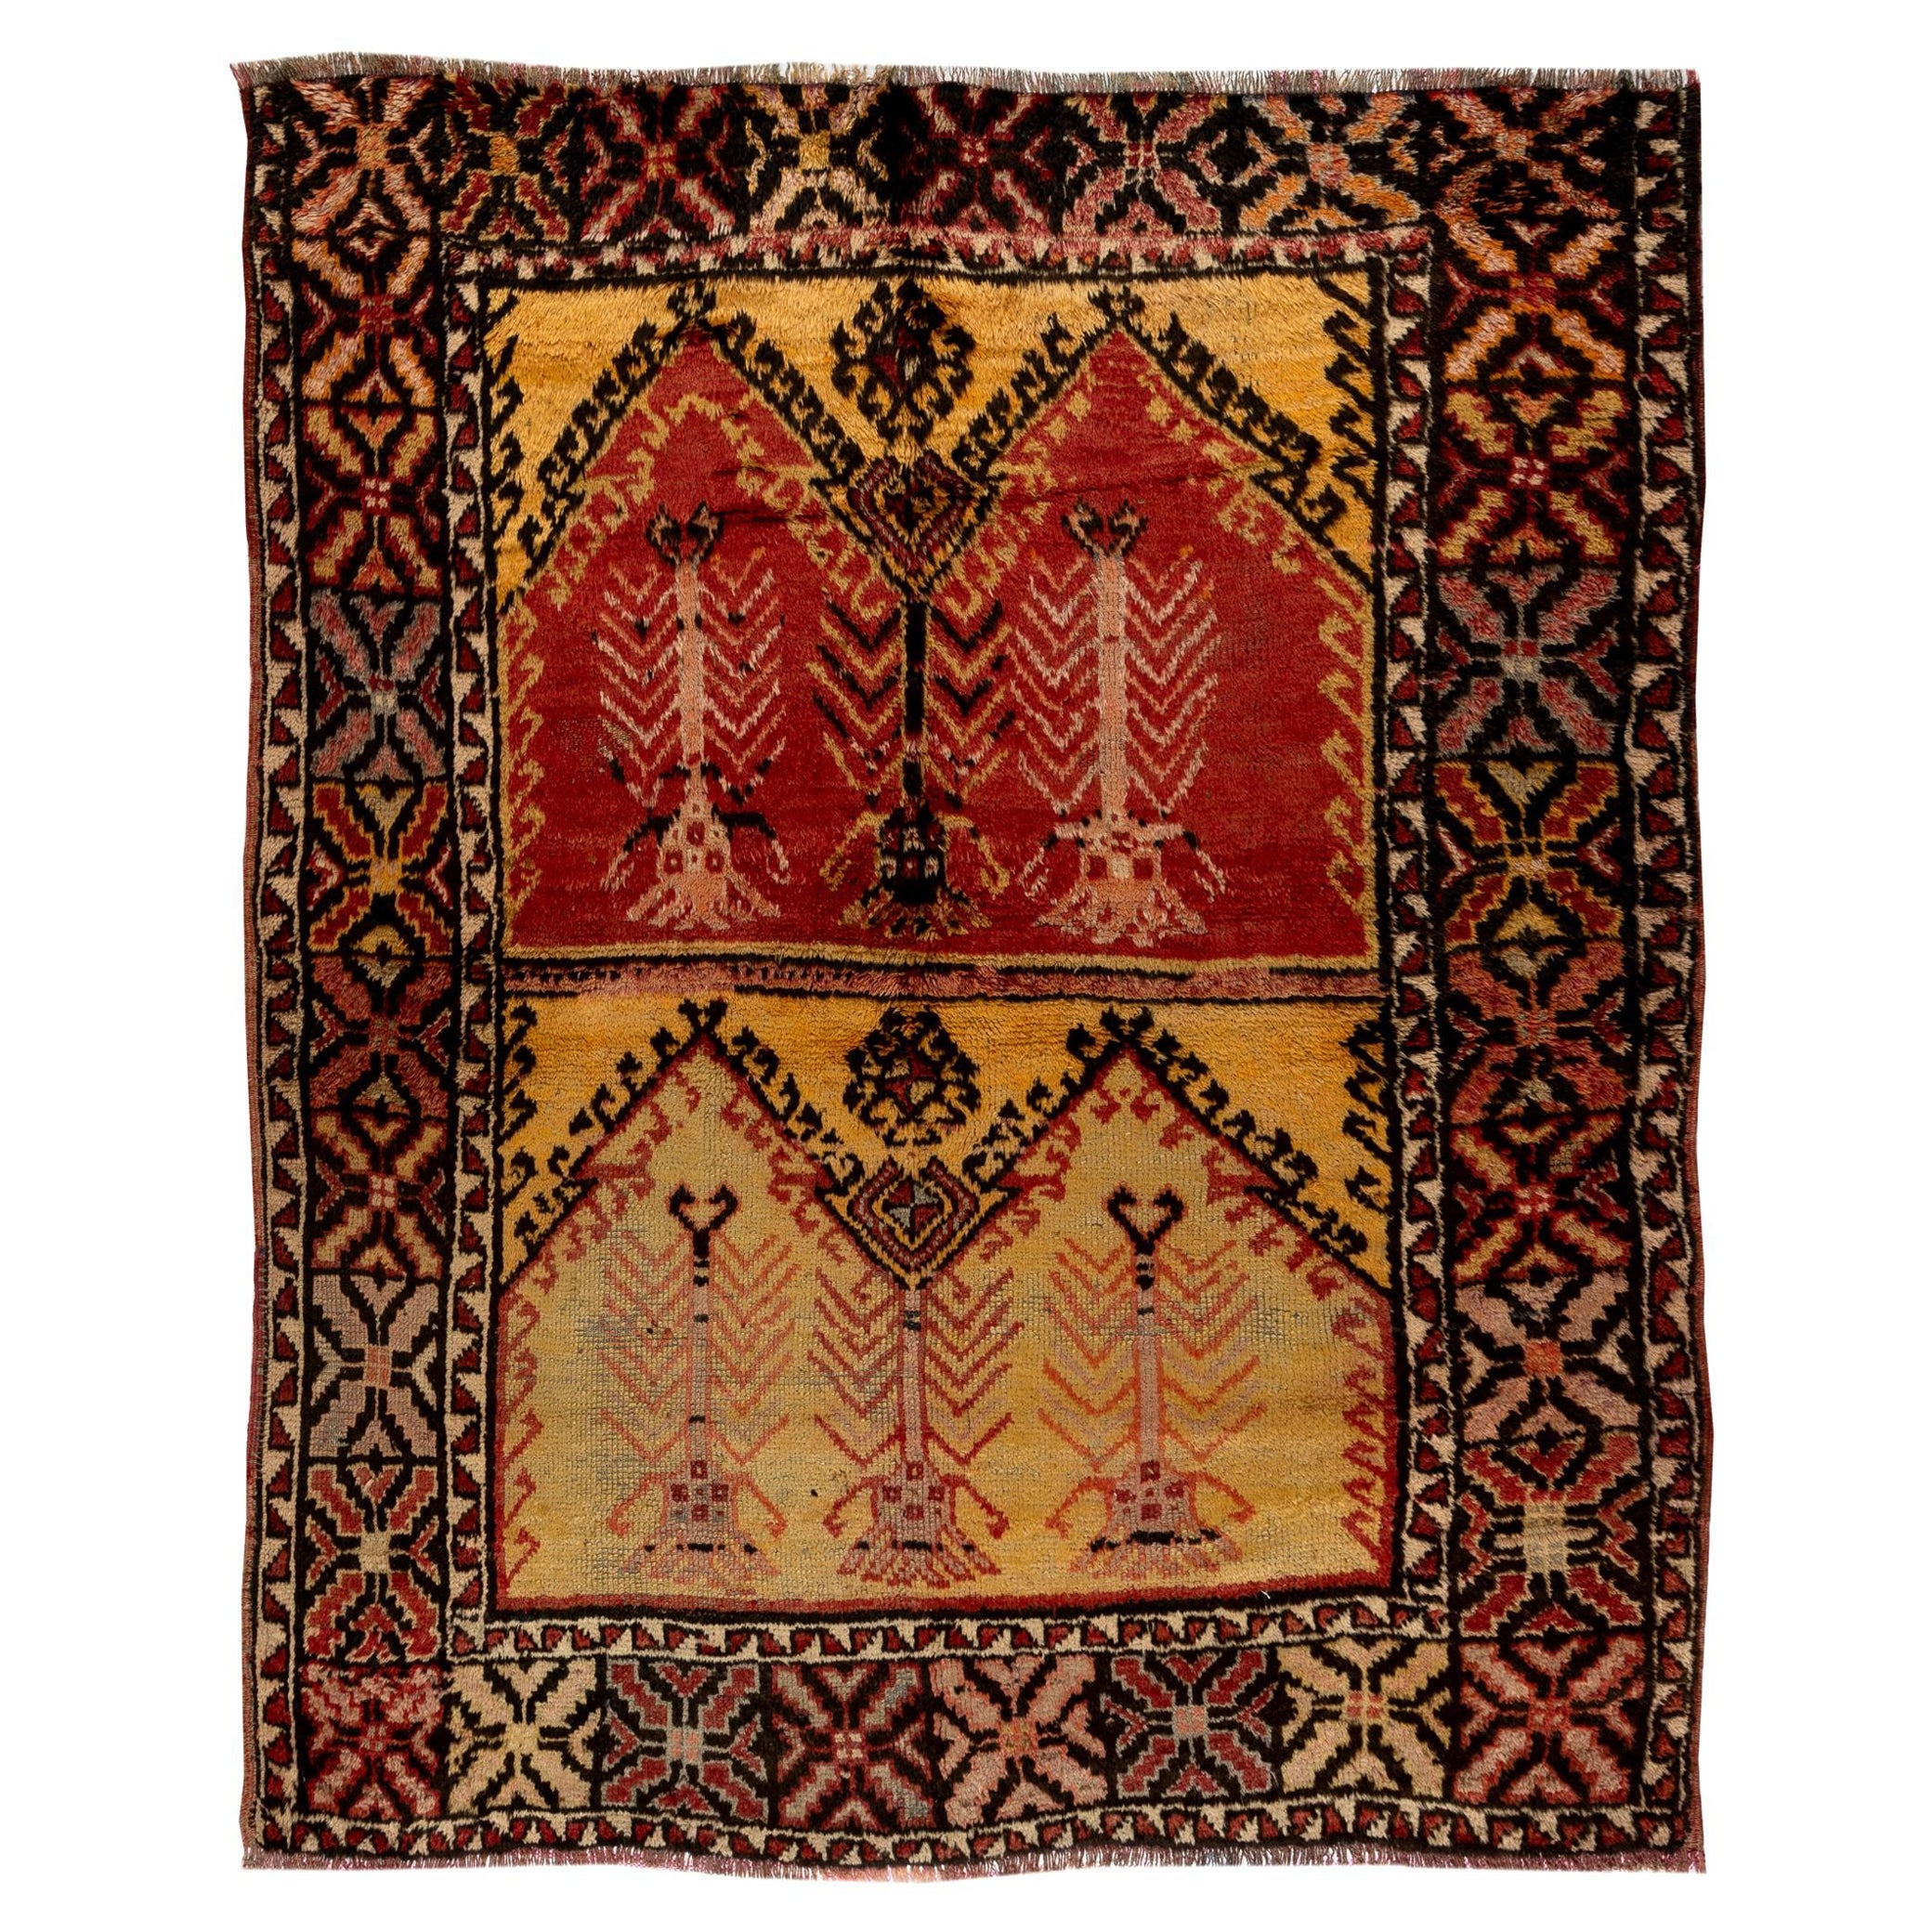 5x6 Ft Hand-Knotted Vintage Anatolian "Tulu" Rug, 100% Organic Wool